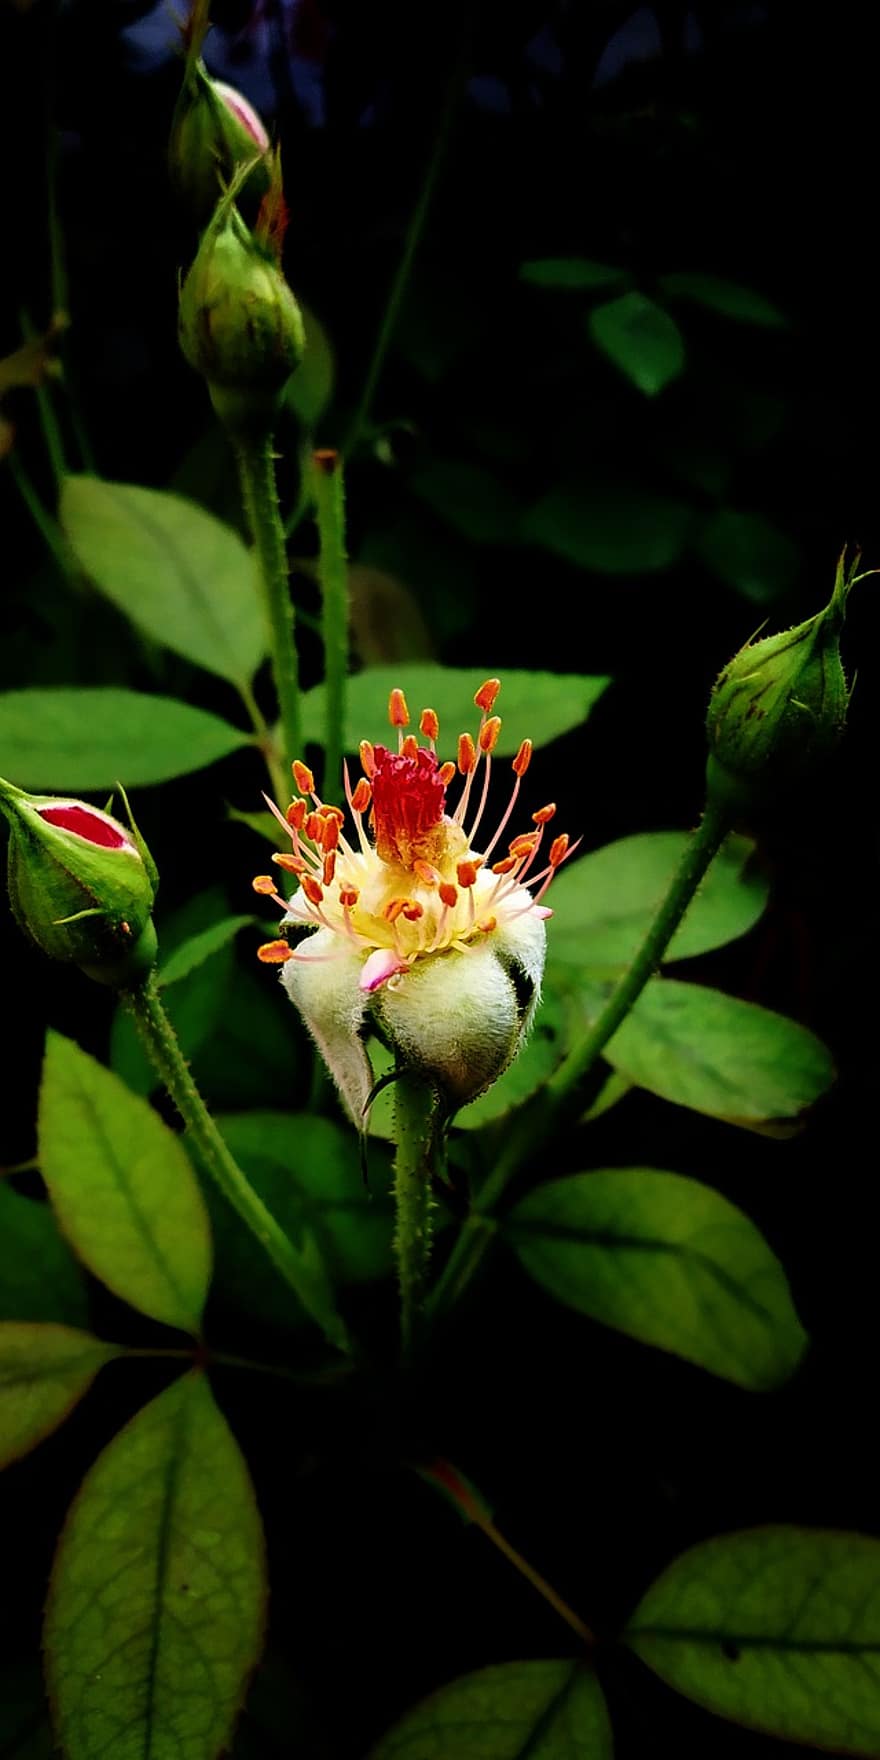 pączek kwiatu, Tapeta, Natura, roślina